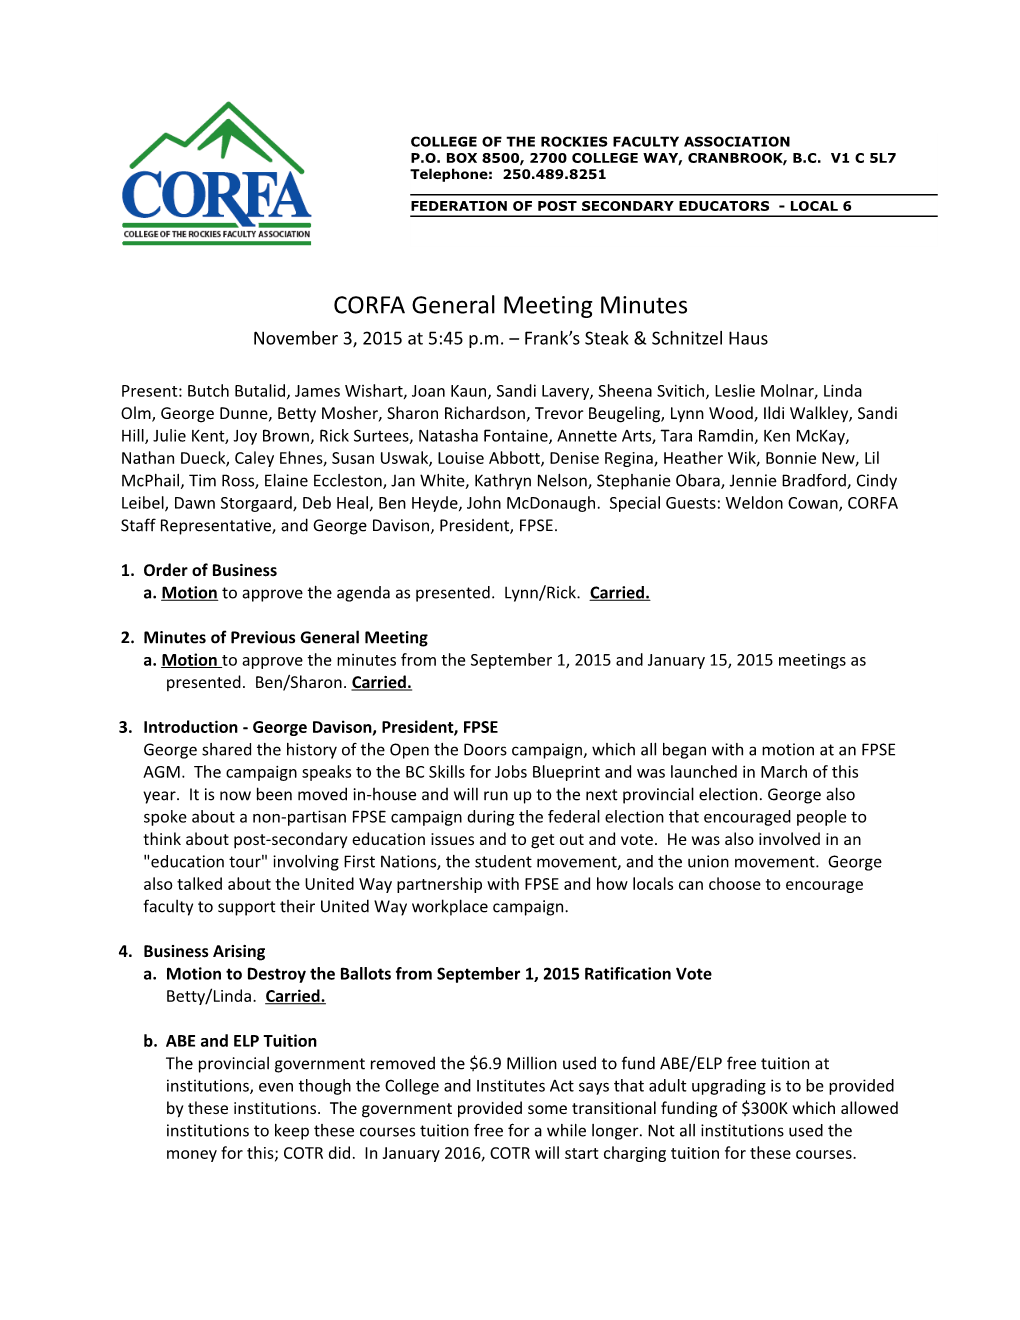 CORFA Generalmeeting Minutes November 3, 2015Page 1